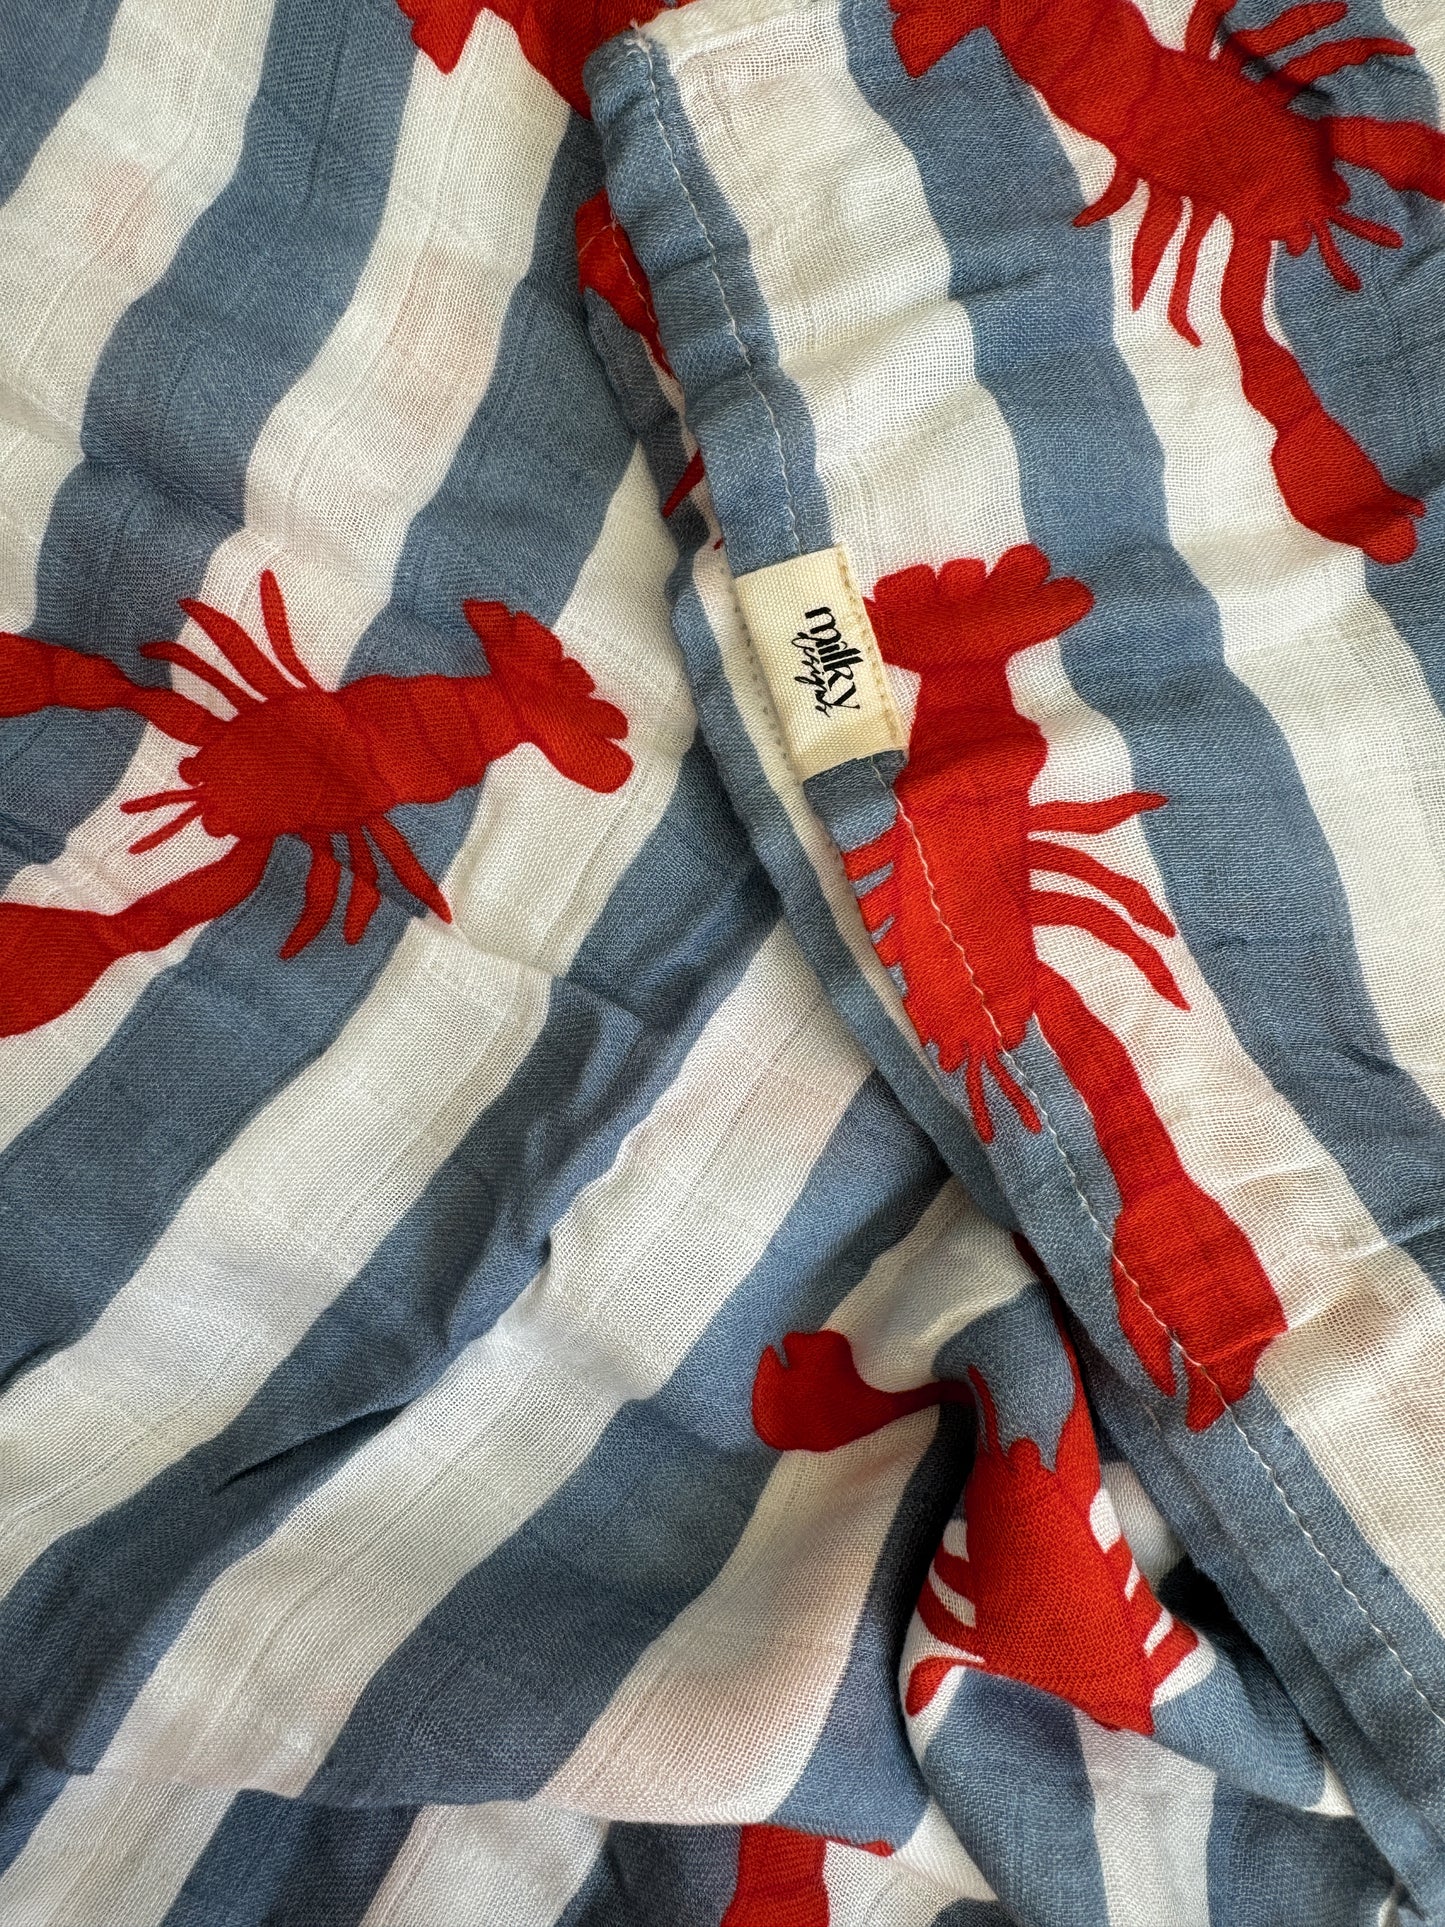 
                  
                    Lobster Wrap
                  
                